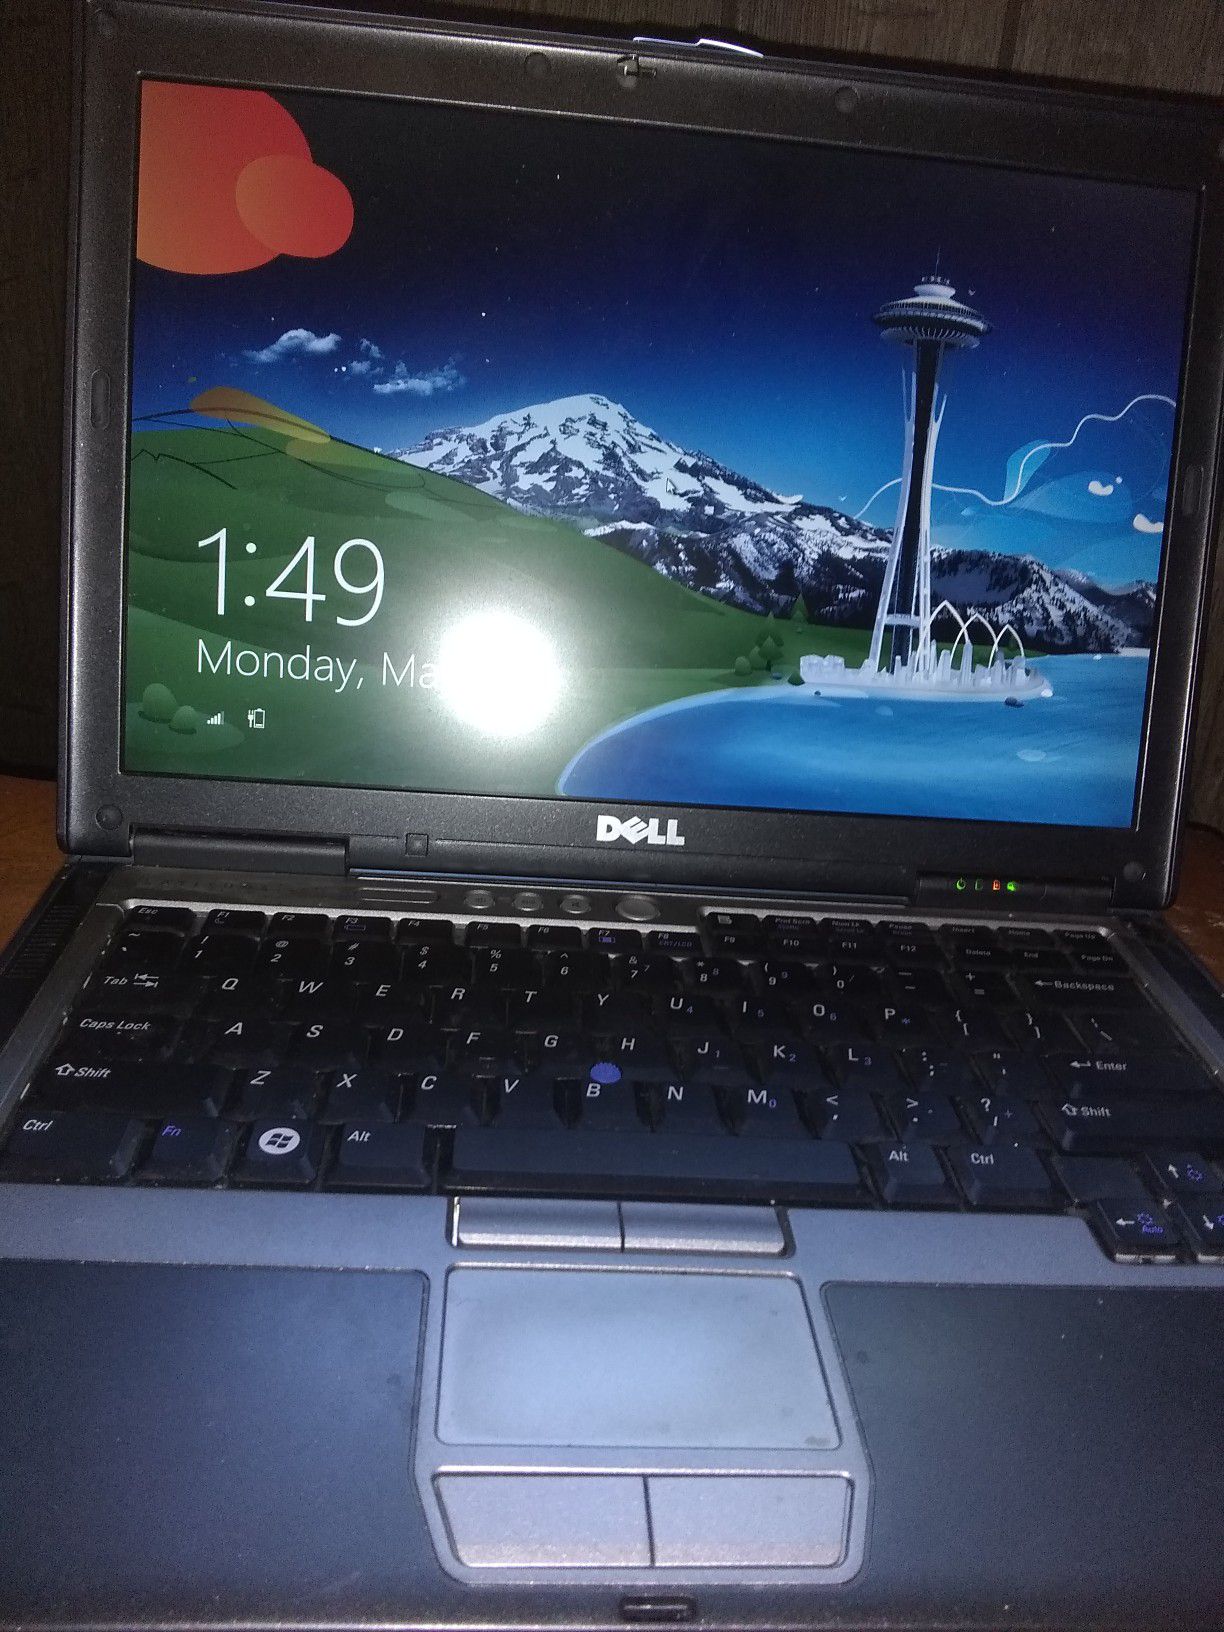 Dell Latitude D630 Laptop Windows 7 installed 80gb